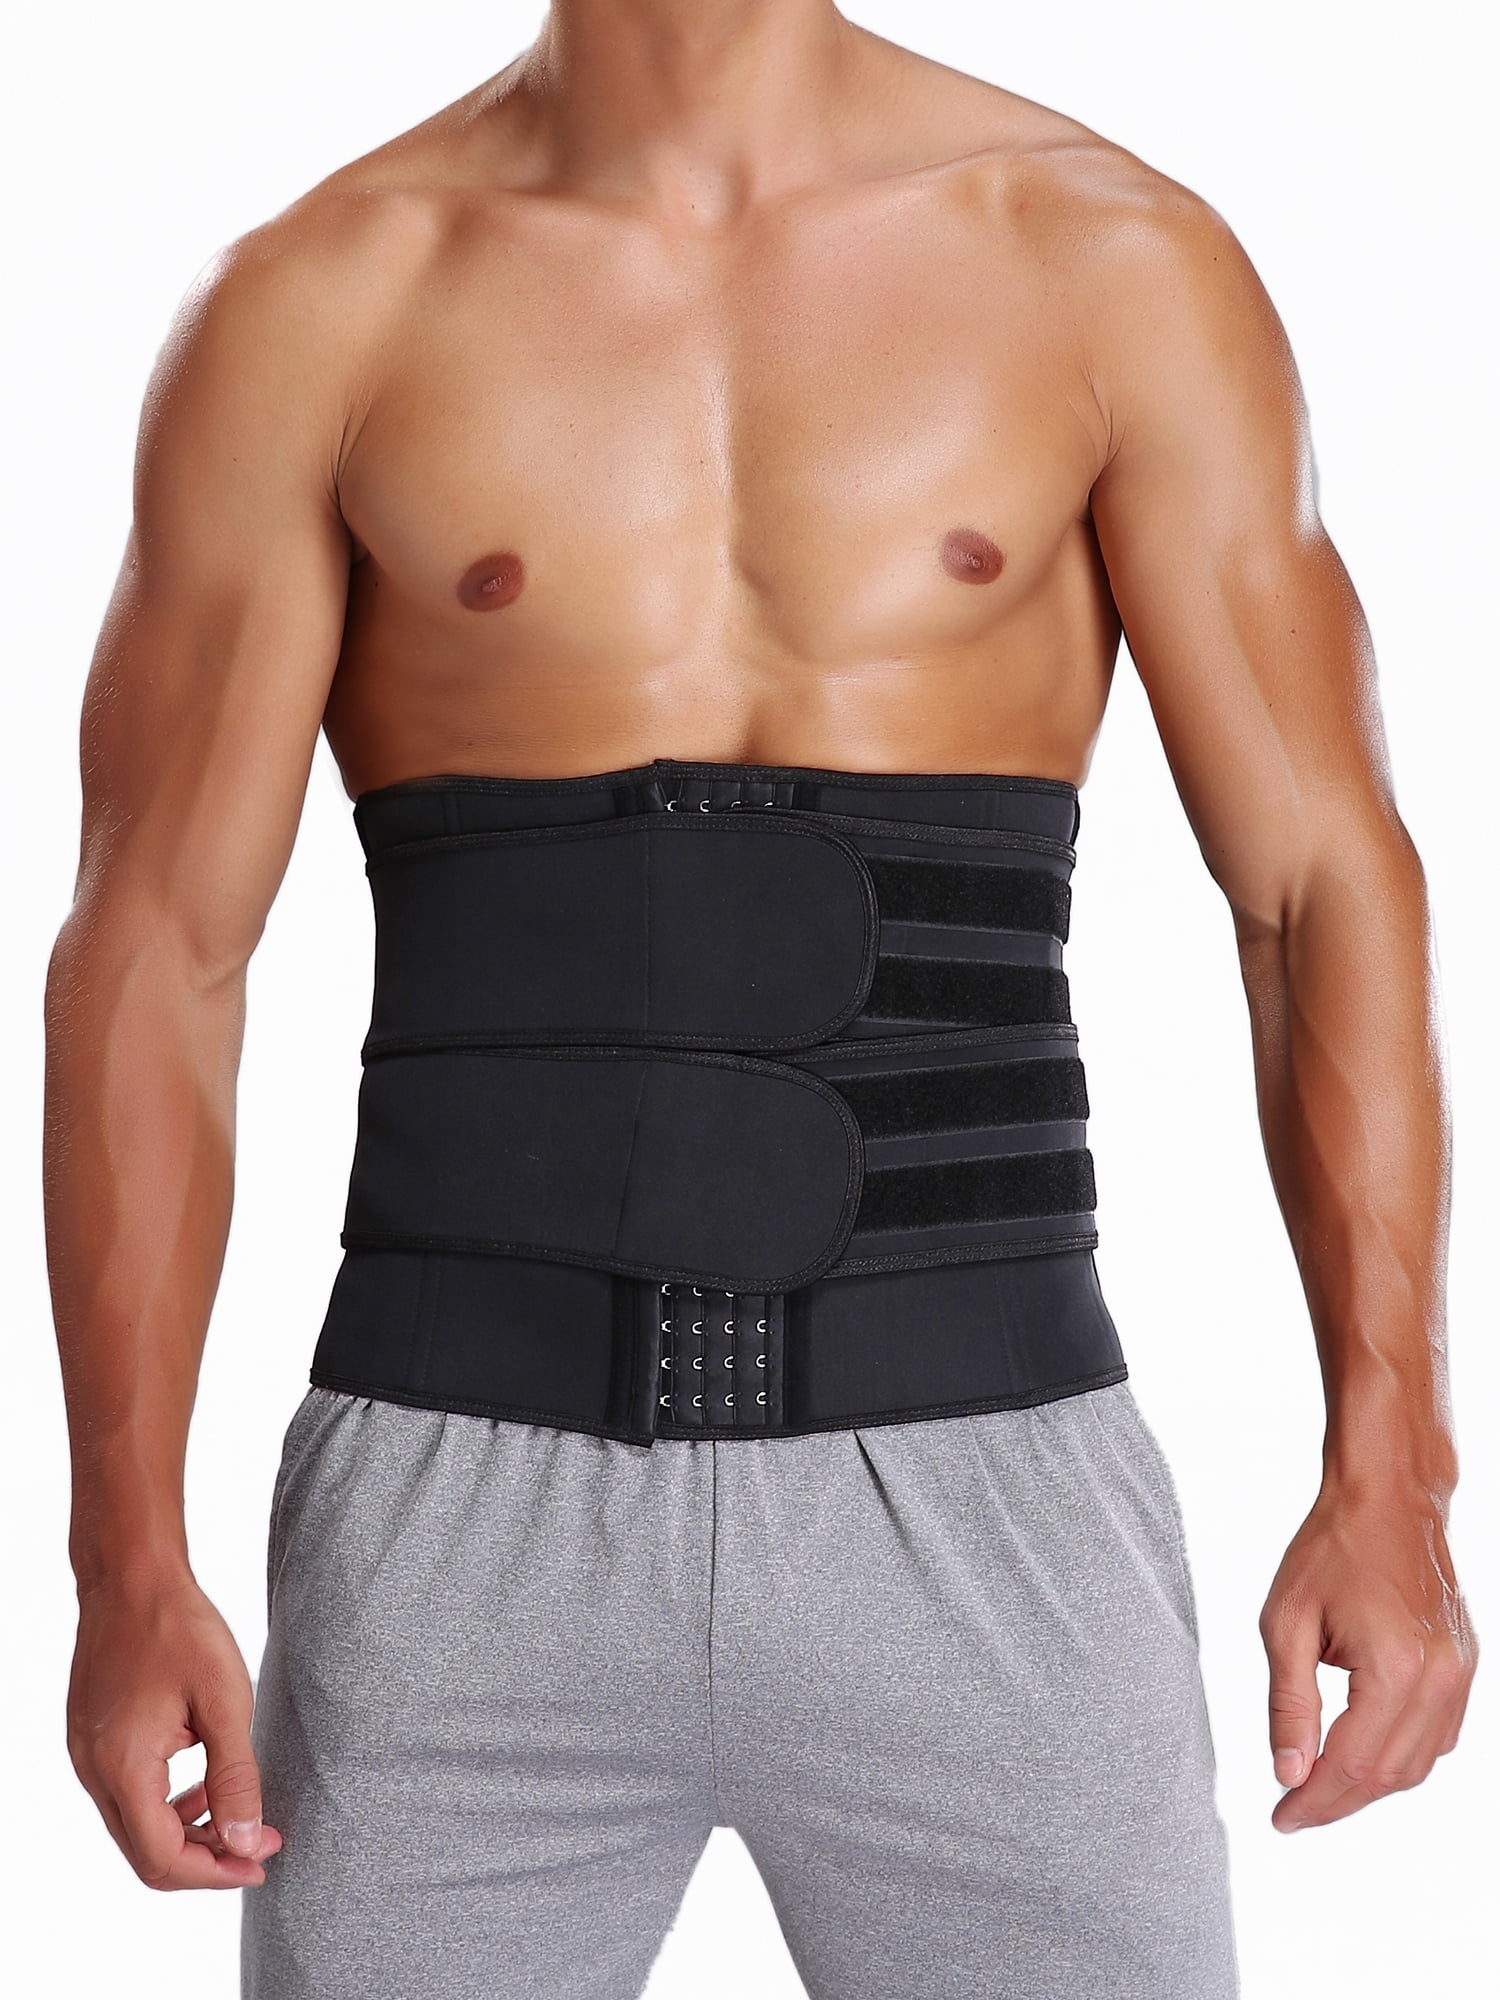 Sauna Sweat Belt MELERIO Waist Trimmer for Women & Men Back Support Waist Trainer with Pockets